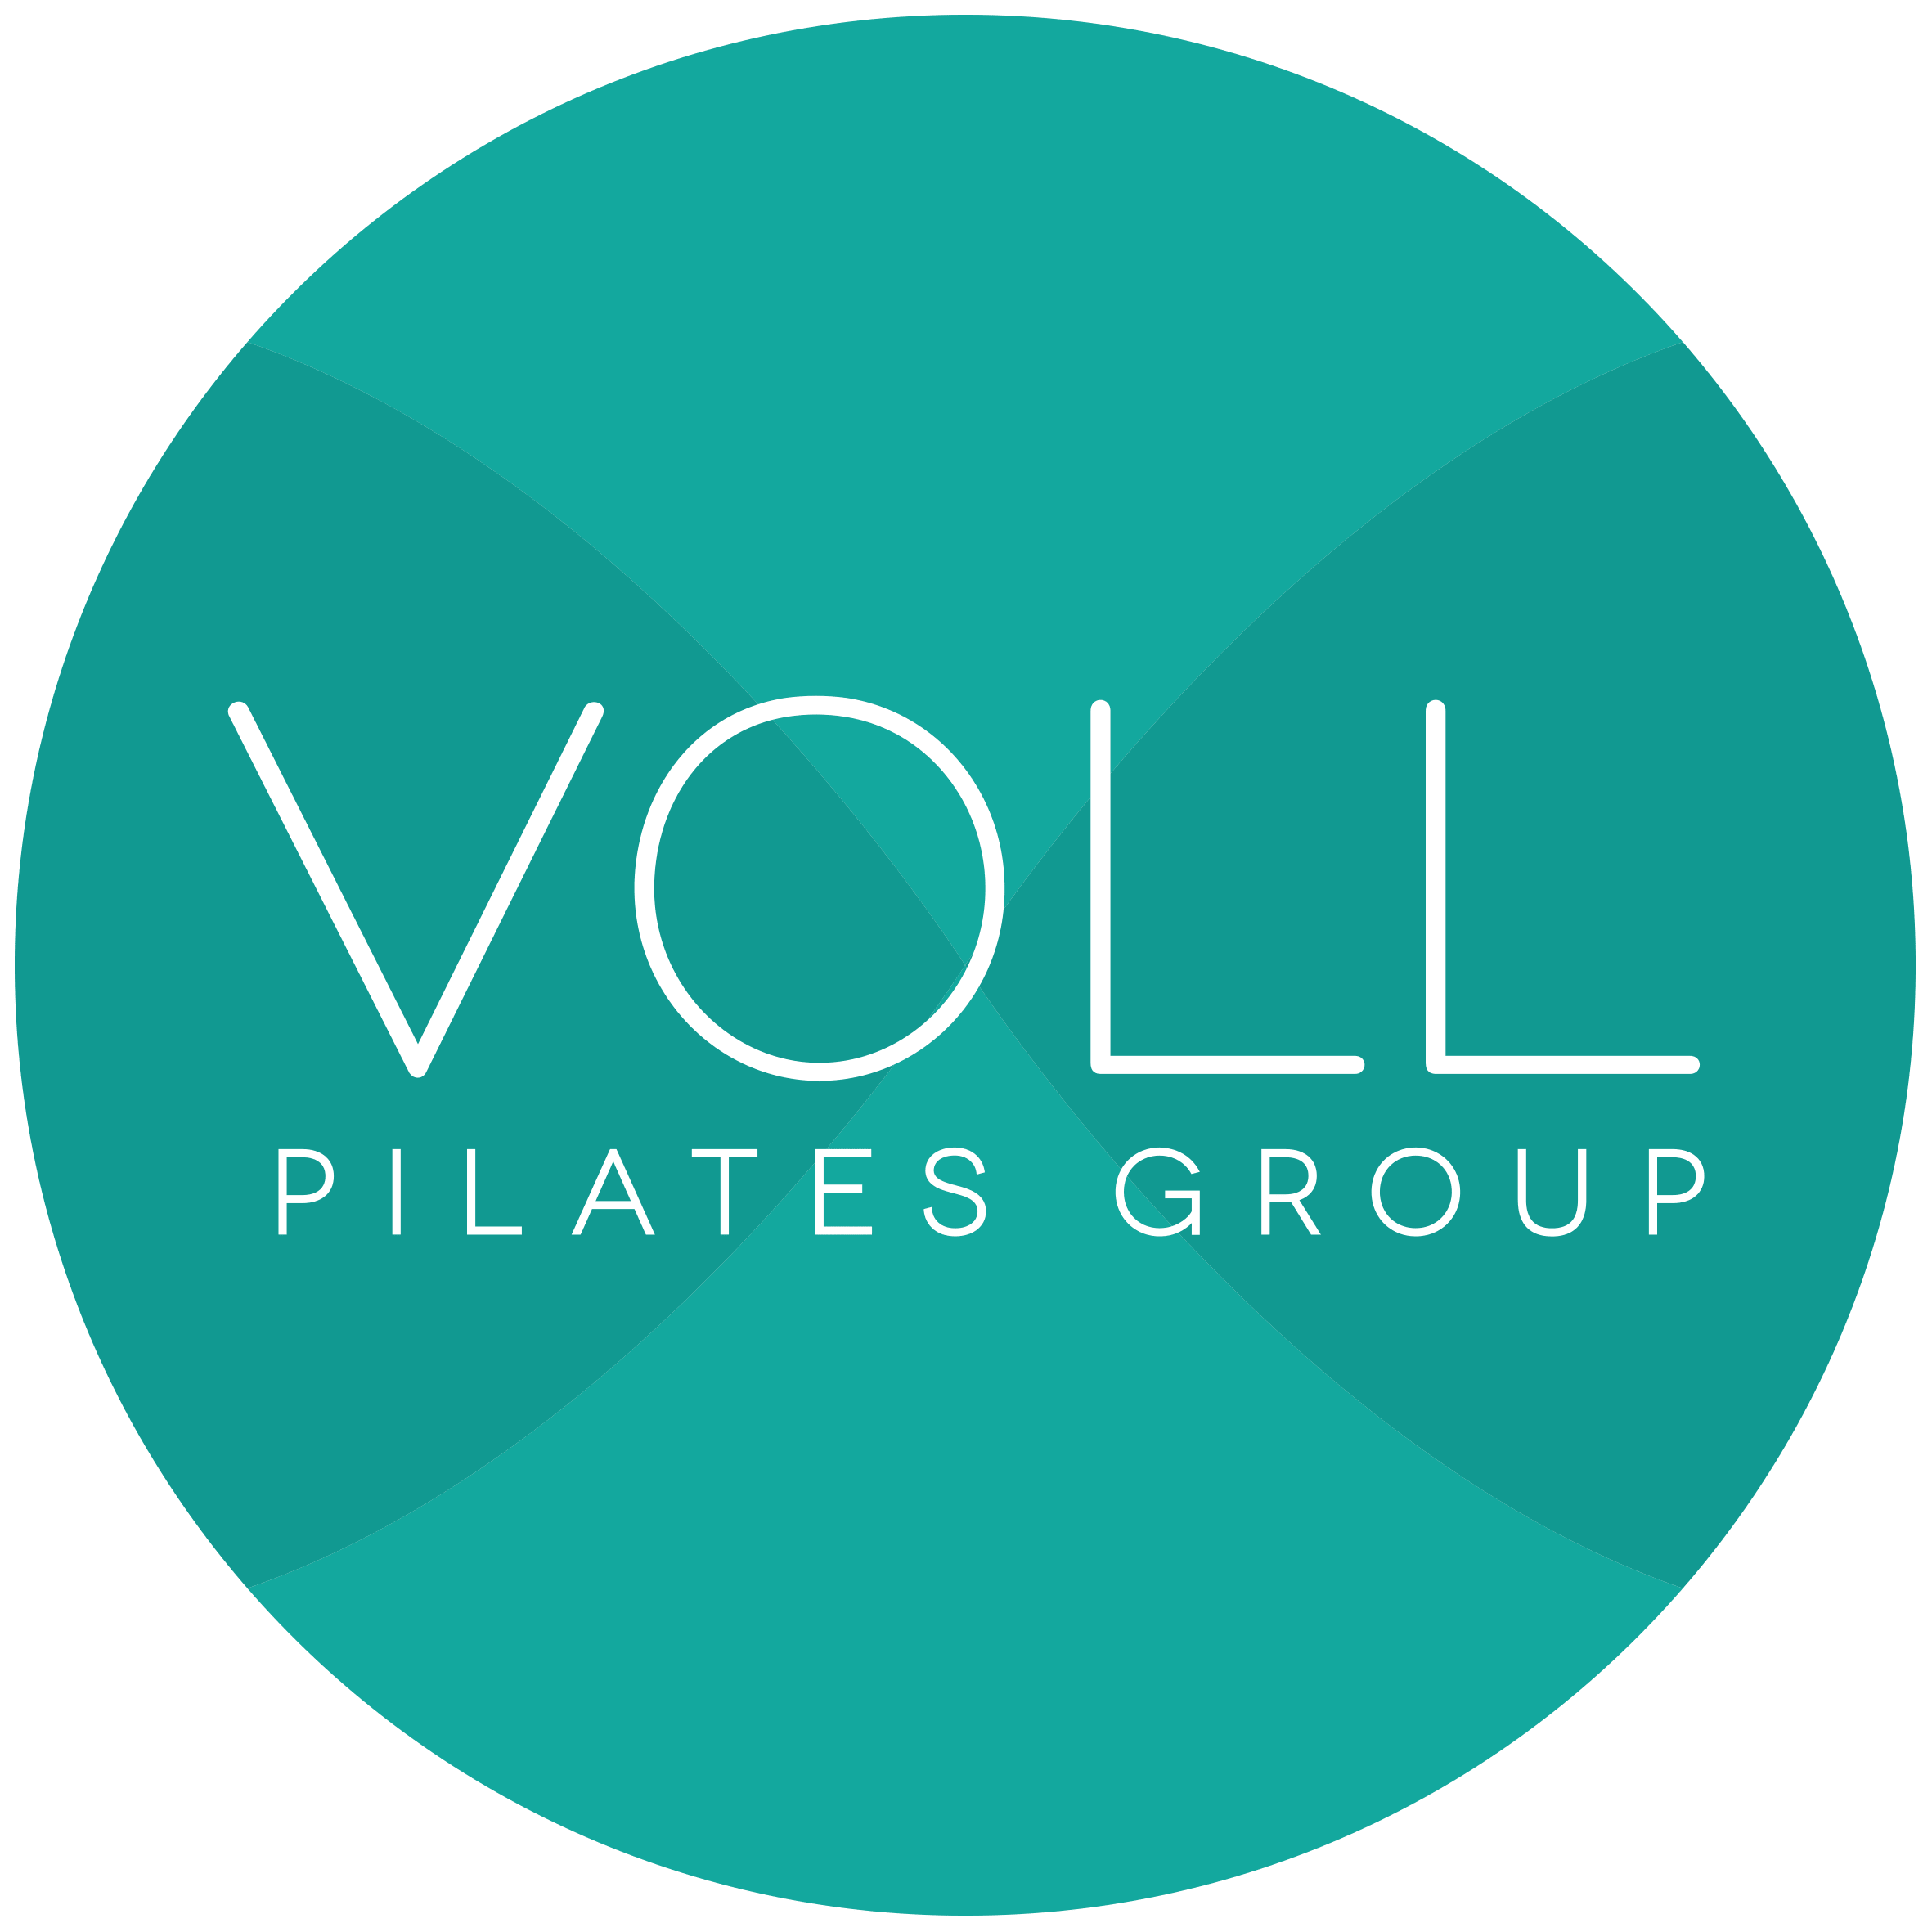 Voll Pilates